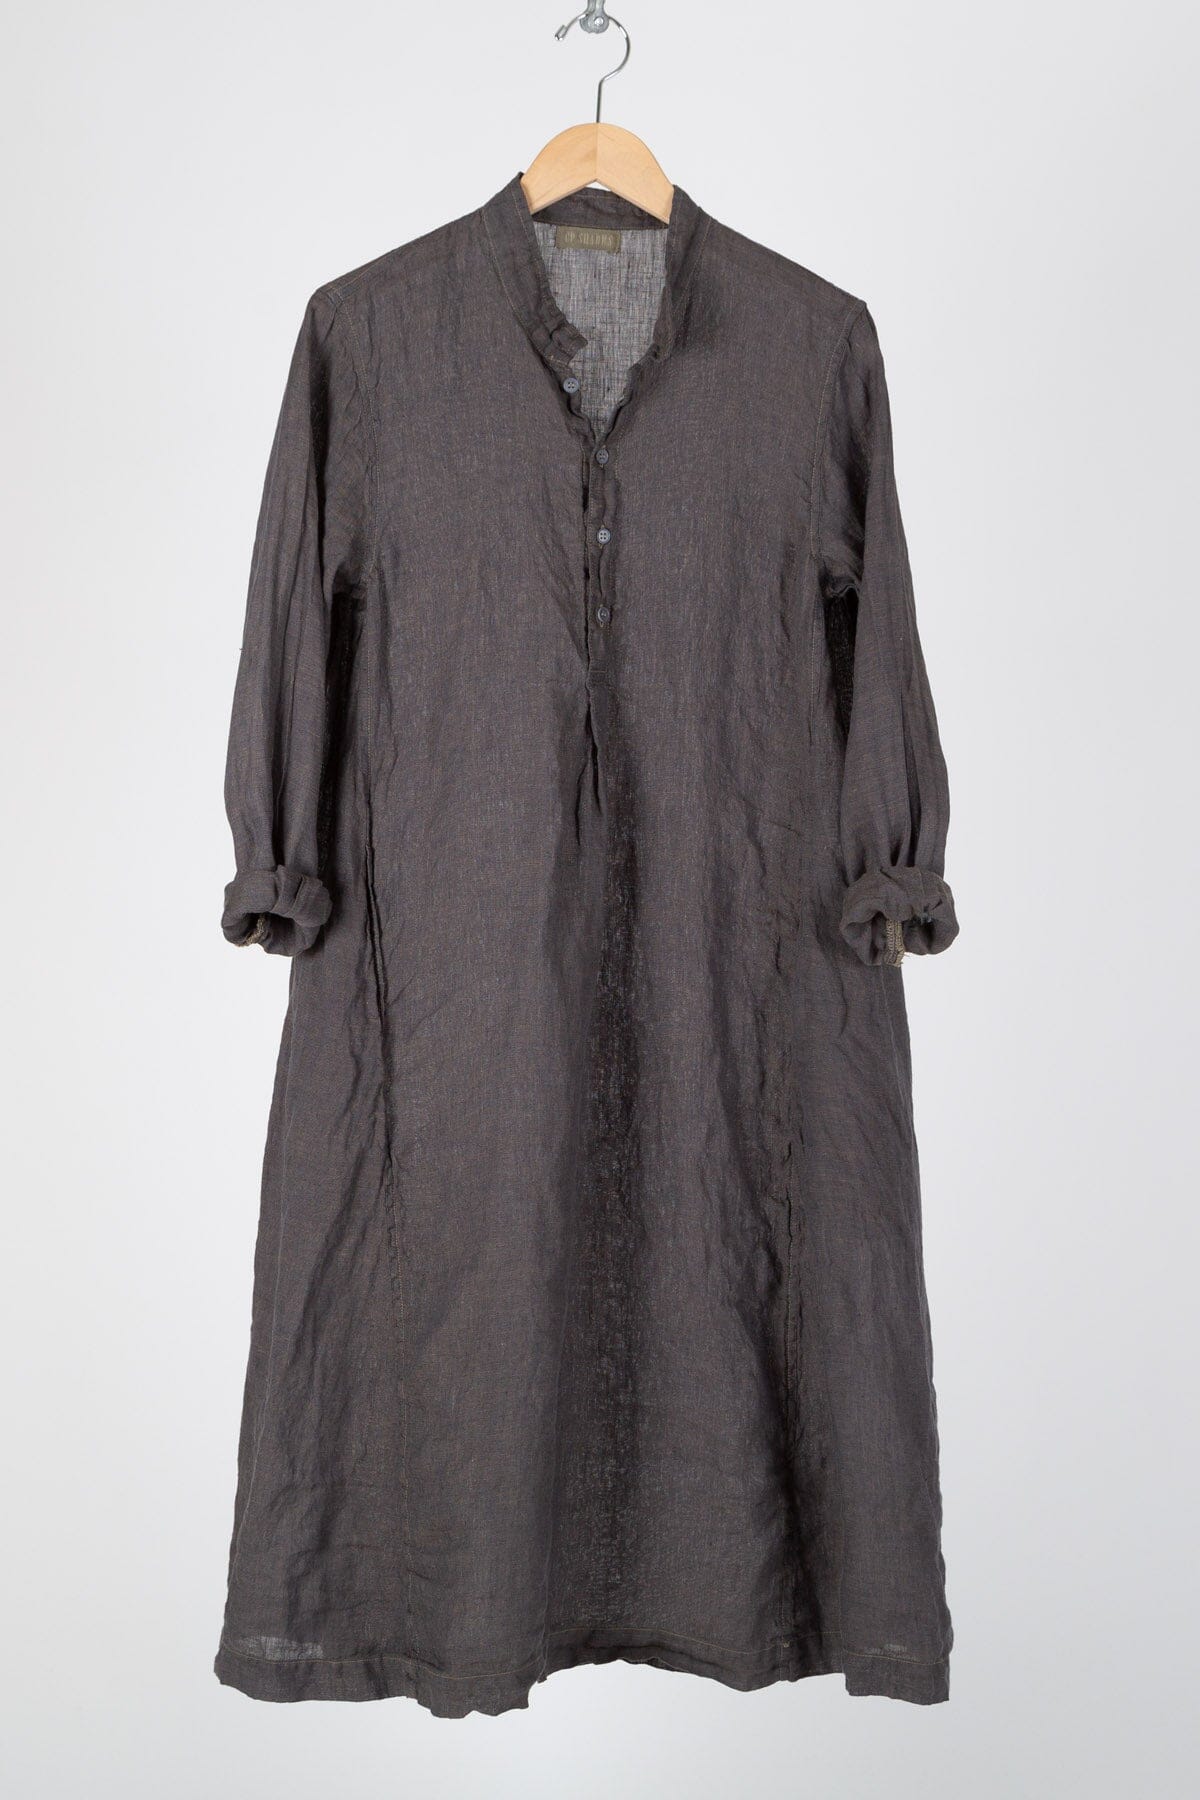 Juliana - Iridescent Linen S15 - Iridescent Skirts/Dresses CP Shades oliveto 162